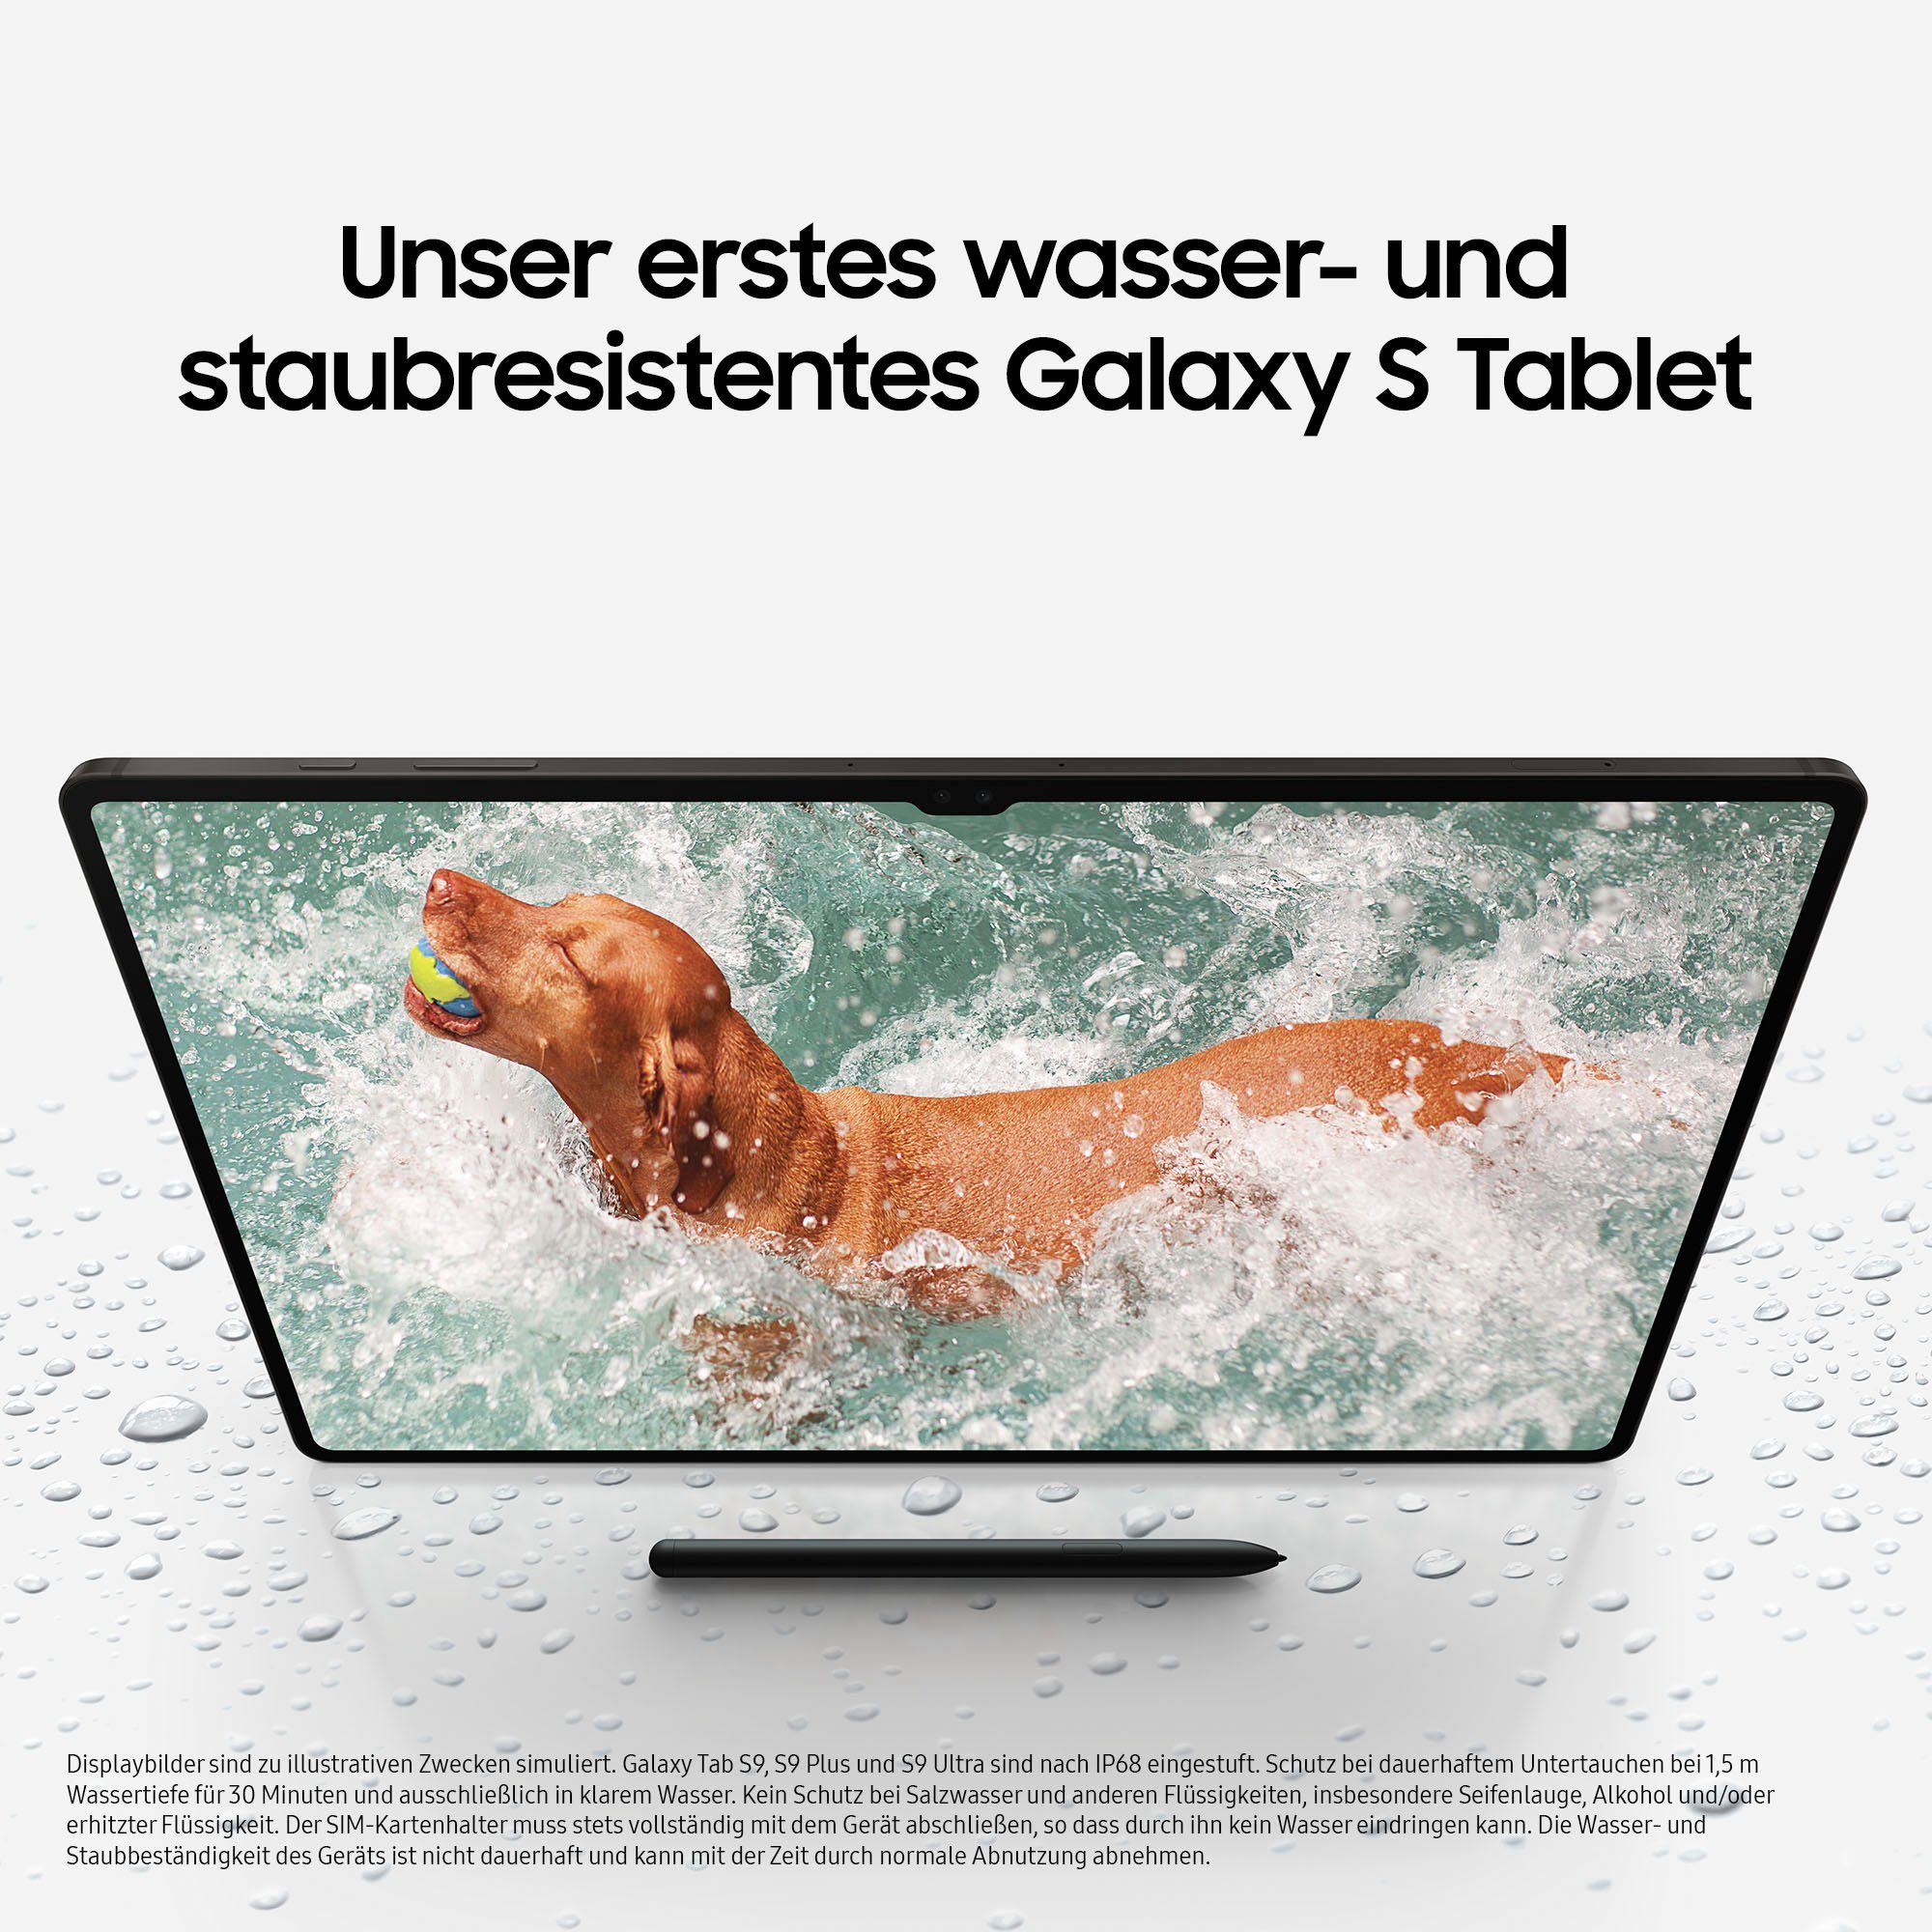 Beige WiFi Tablet Galaxy Android) GB, (12,4", Samsung S9+ Tab 256